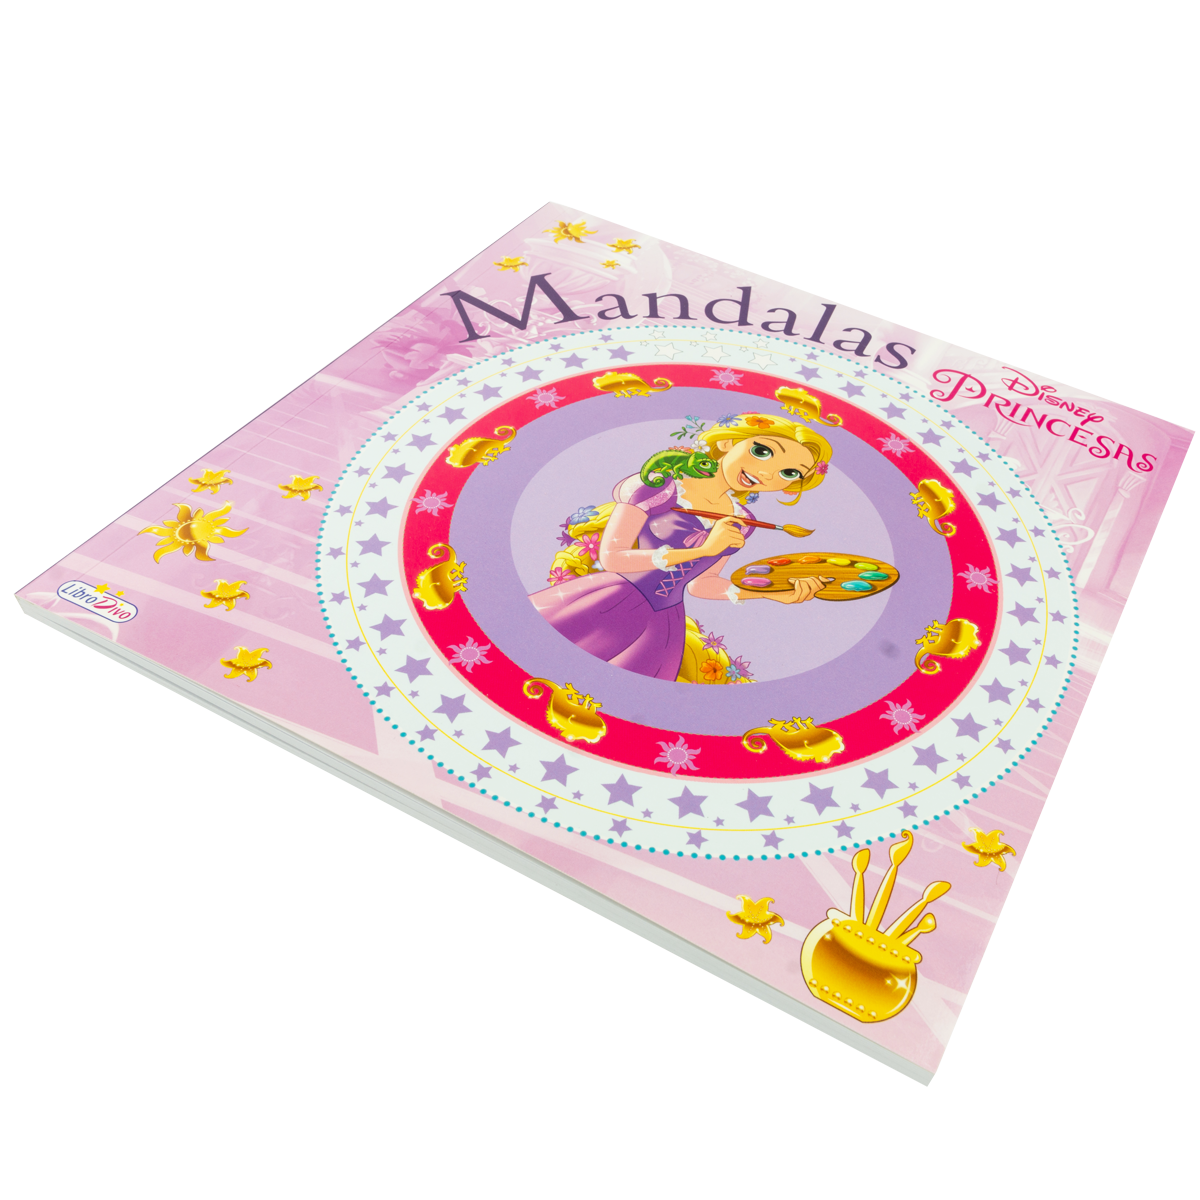 Libro de mandalas para colorear de Rapunzel Disney